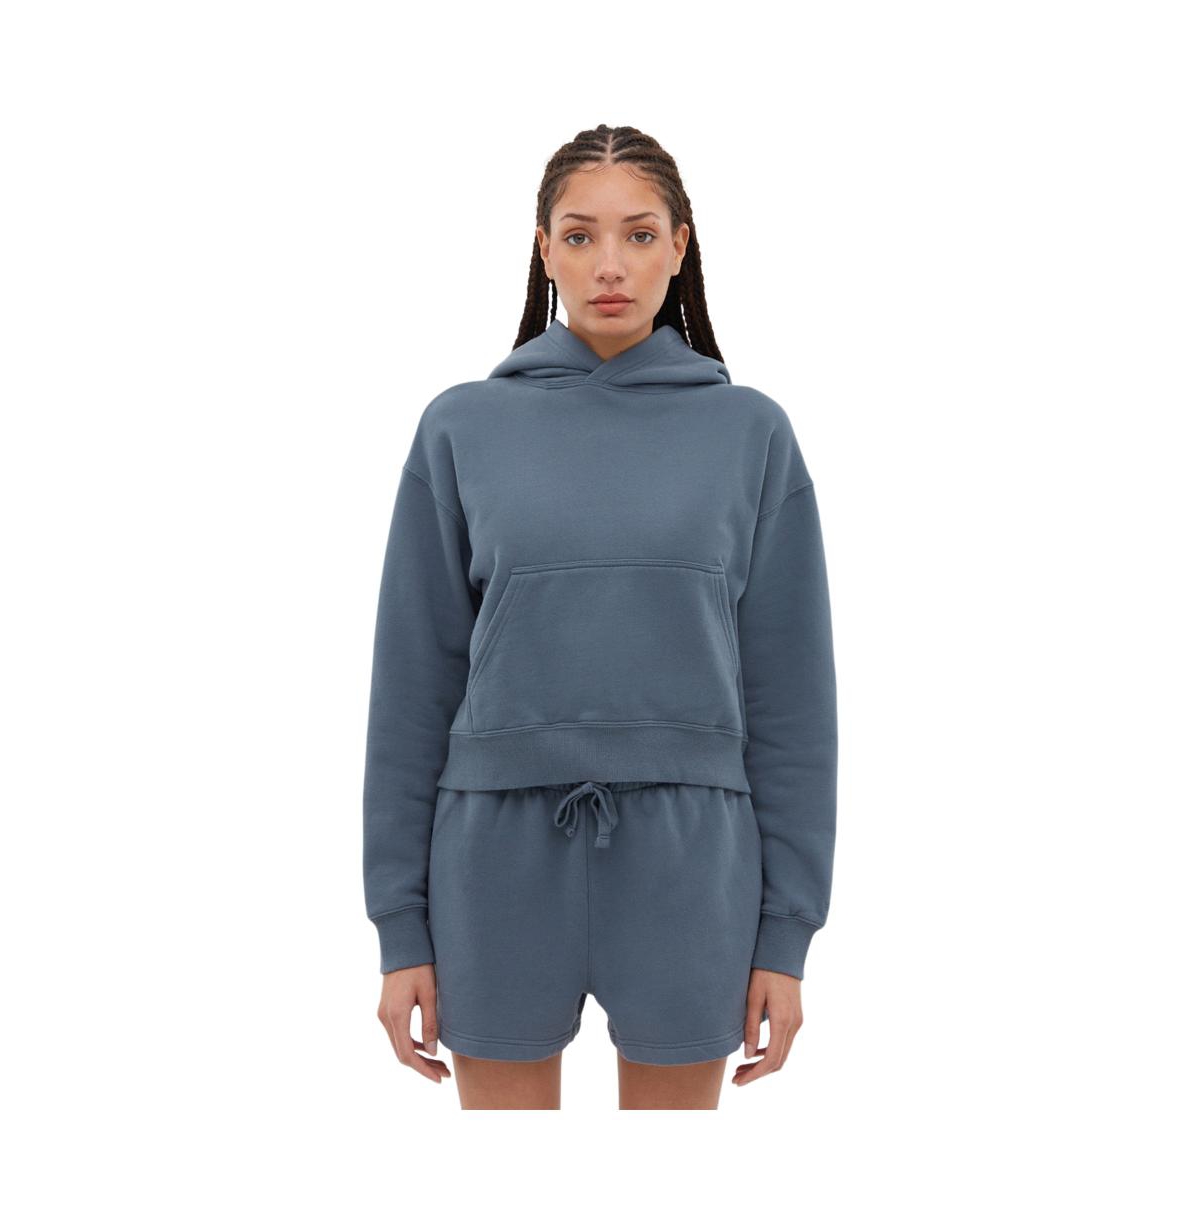 Women's Hart Eco-Fleece Cropped Hoodie - BLEH10501 - Ice blue